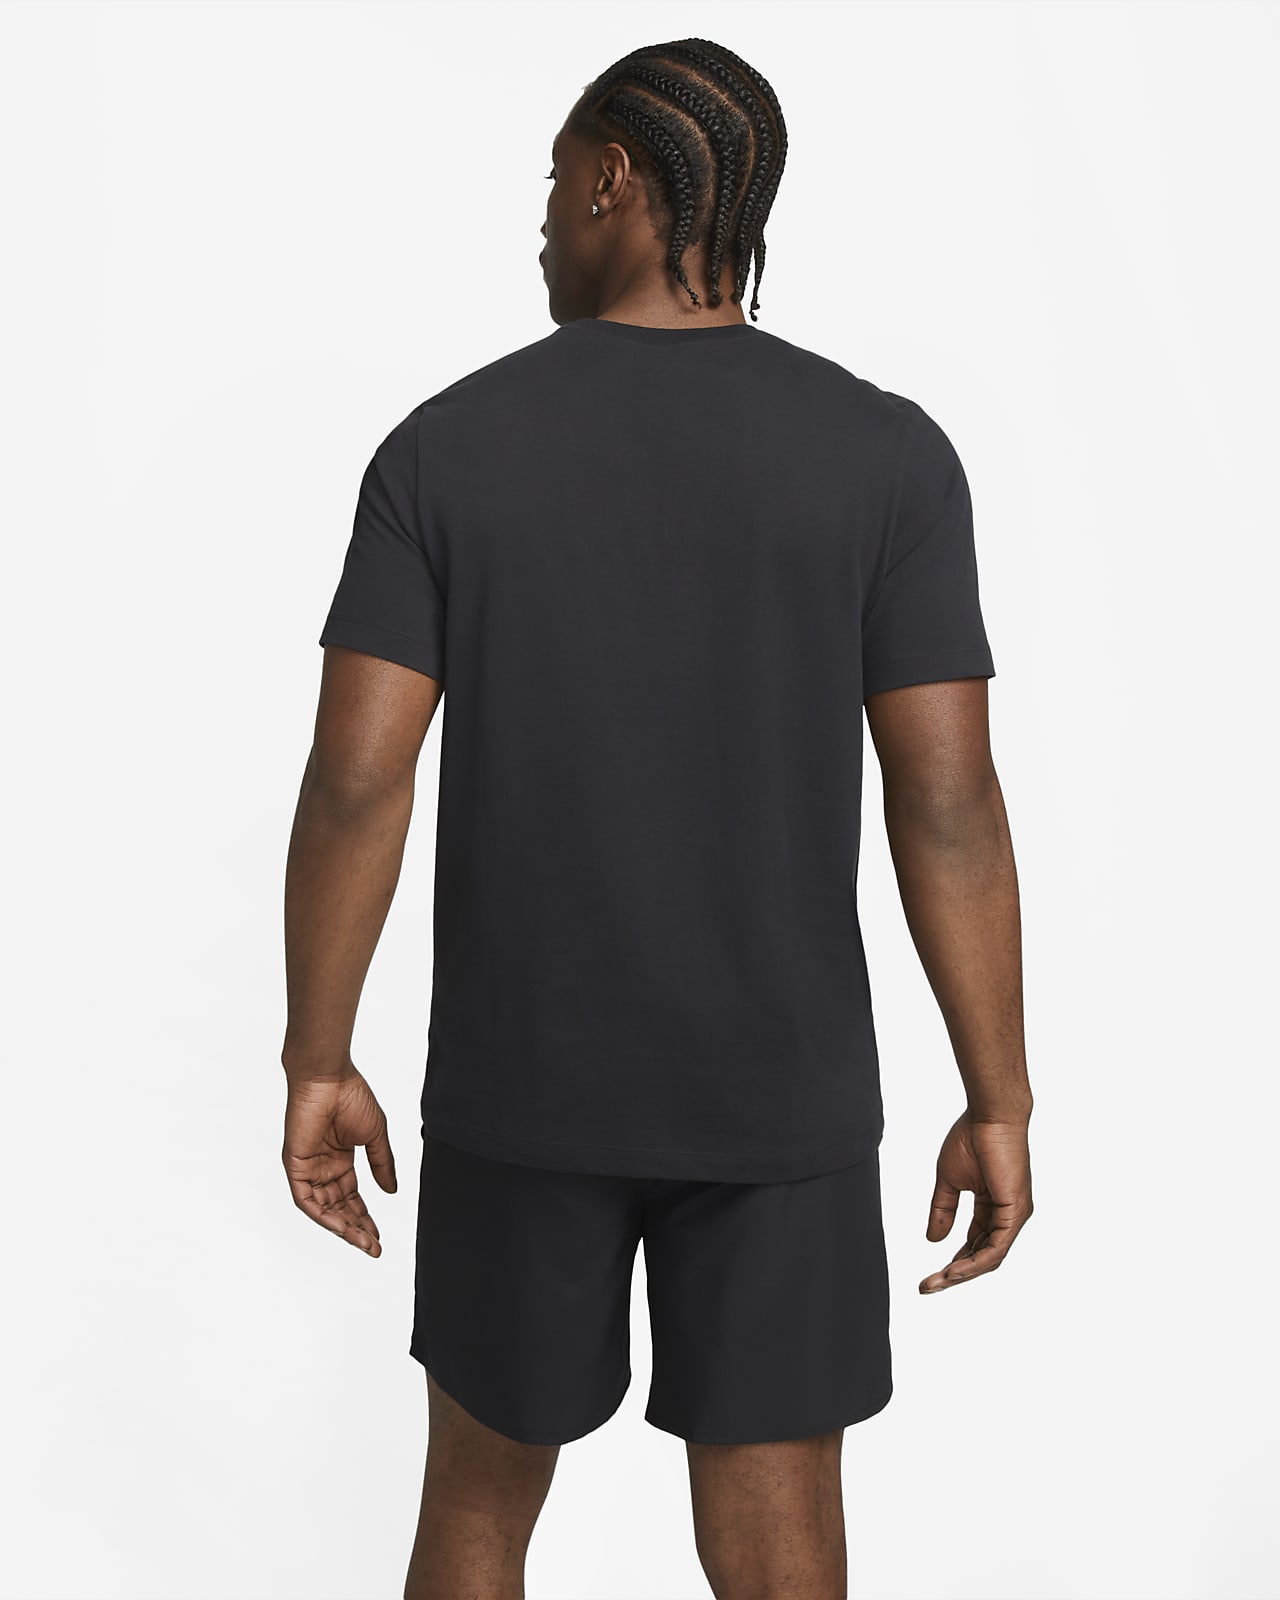 Blaast op dans bijnaam Nike Dri-FIT Hardloopshirt voor heren. Nike NL